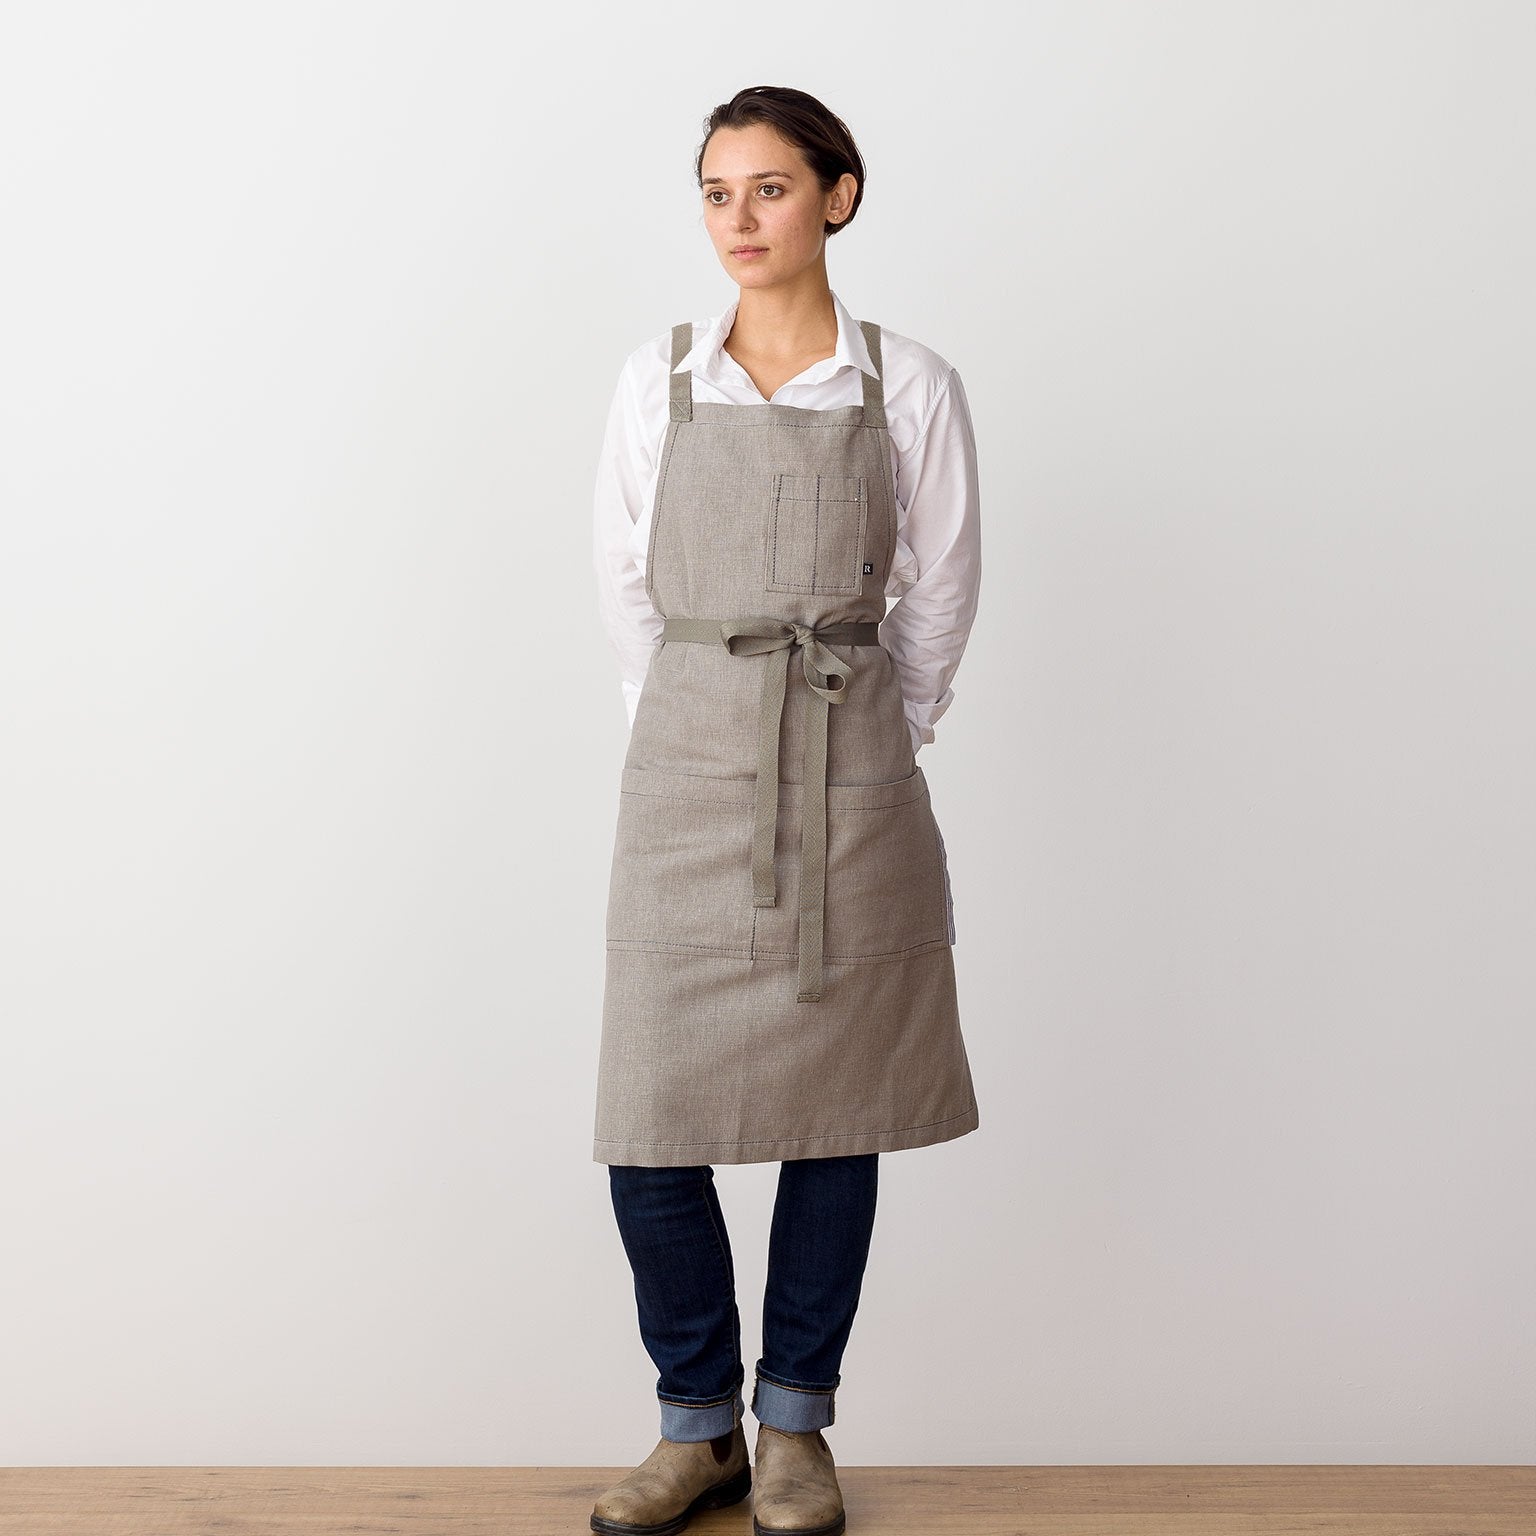 Cross Back Kitchen Apron for Women, Men. Chefs, Baking, BBQ. Tan Cotton Canvas with Pockets., Standard Cross Back - 34”L x 30”W